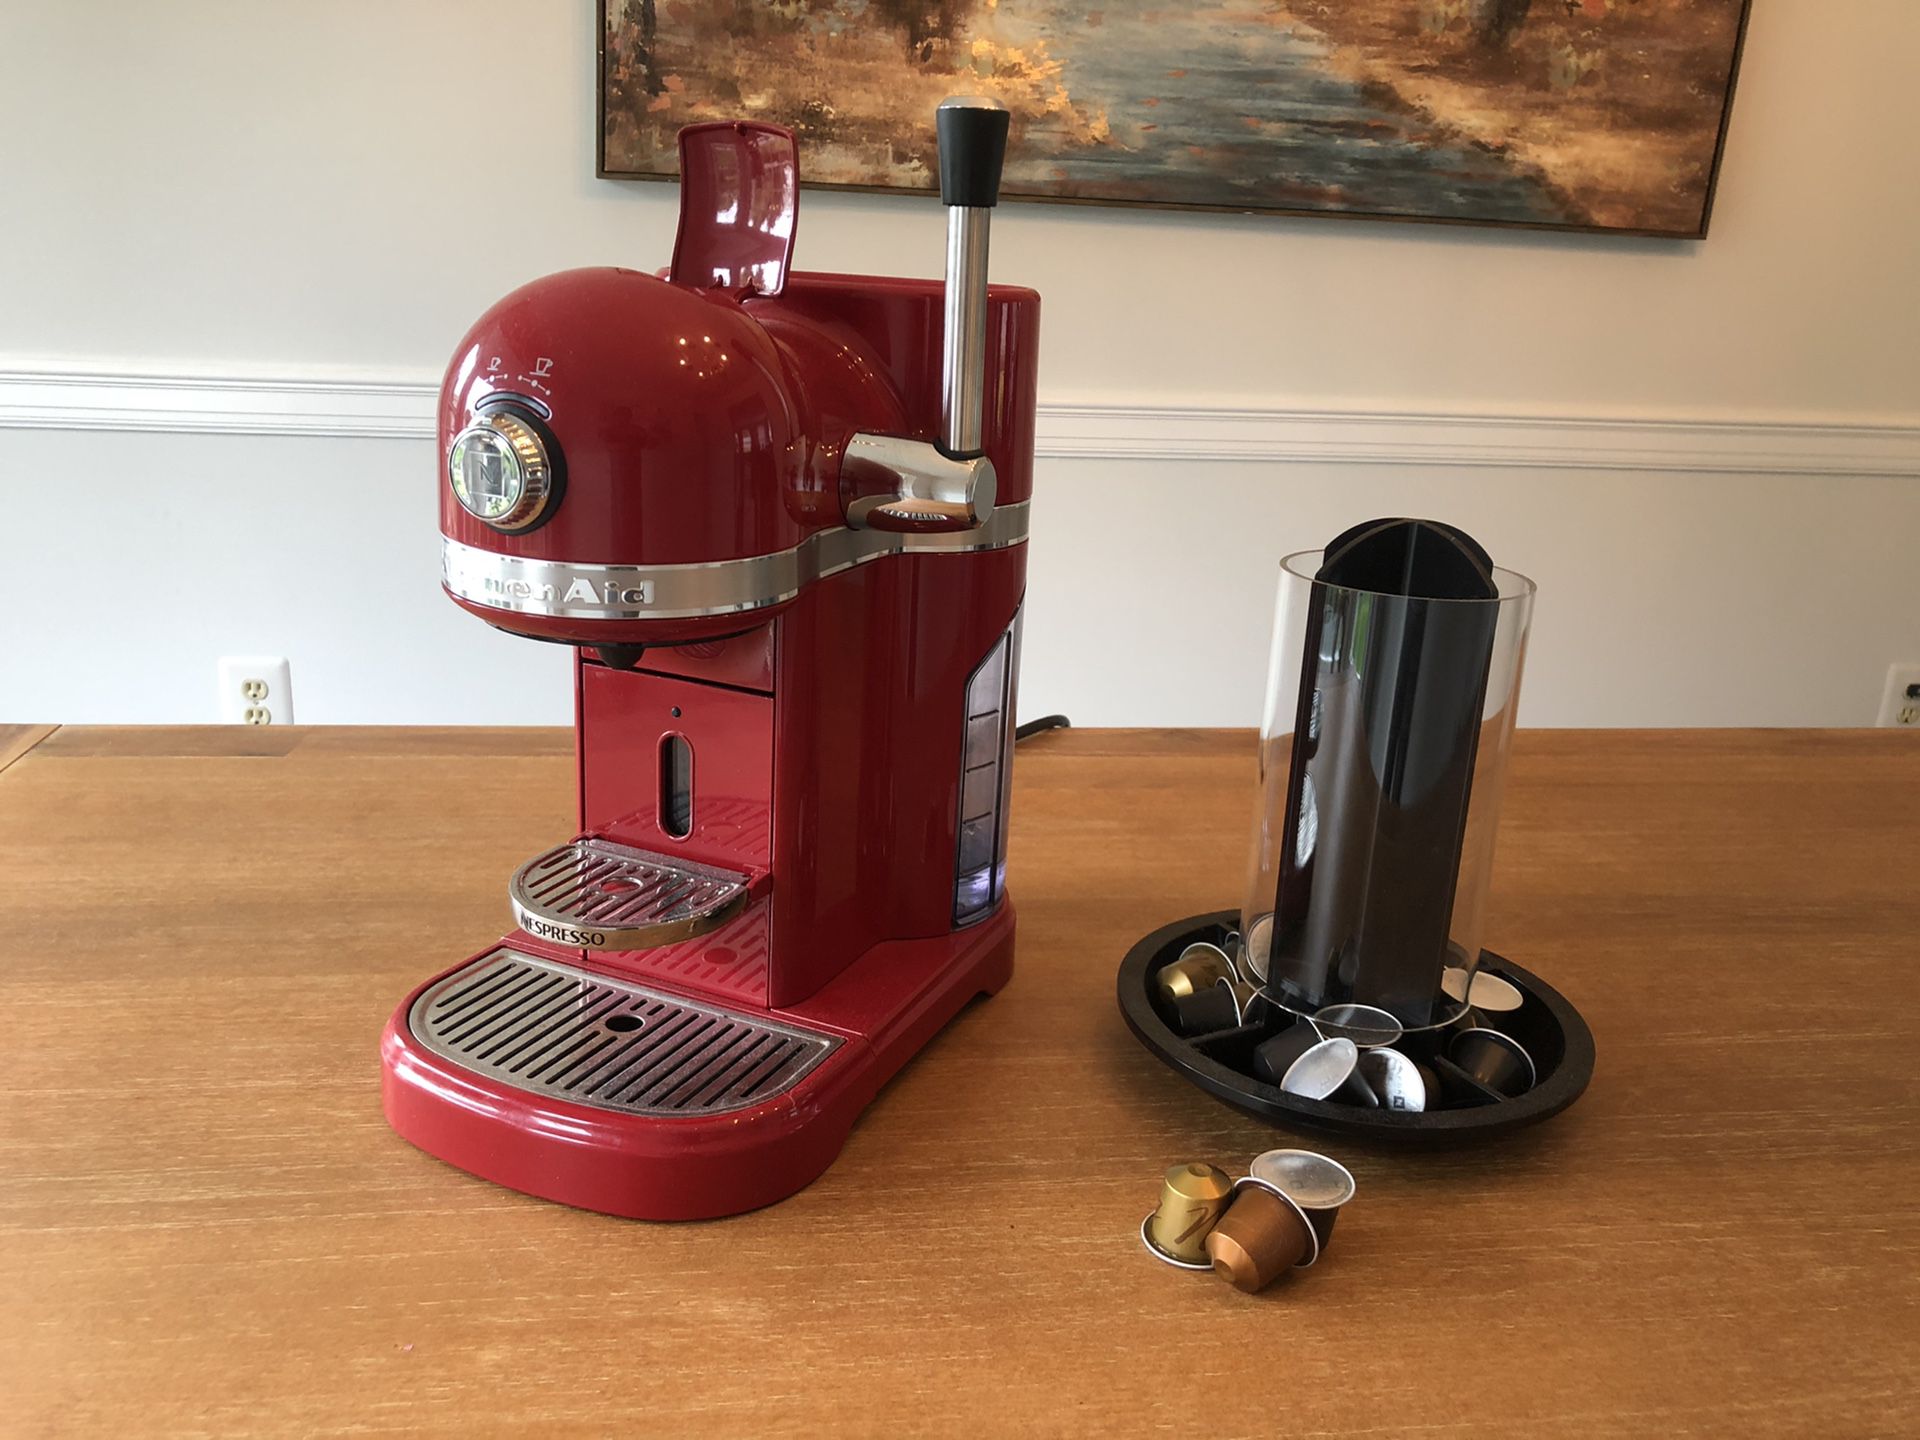 KitchenAid Nespresso machine